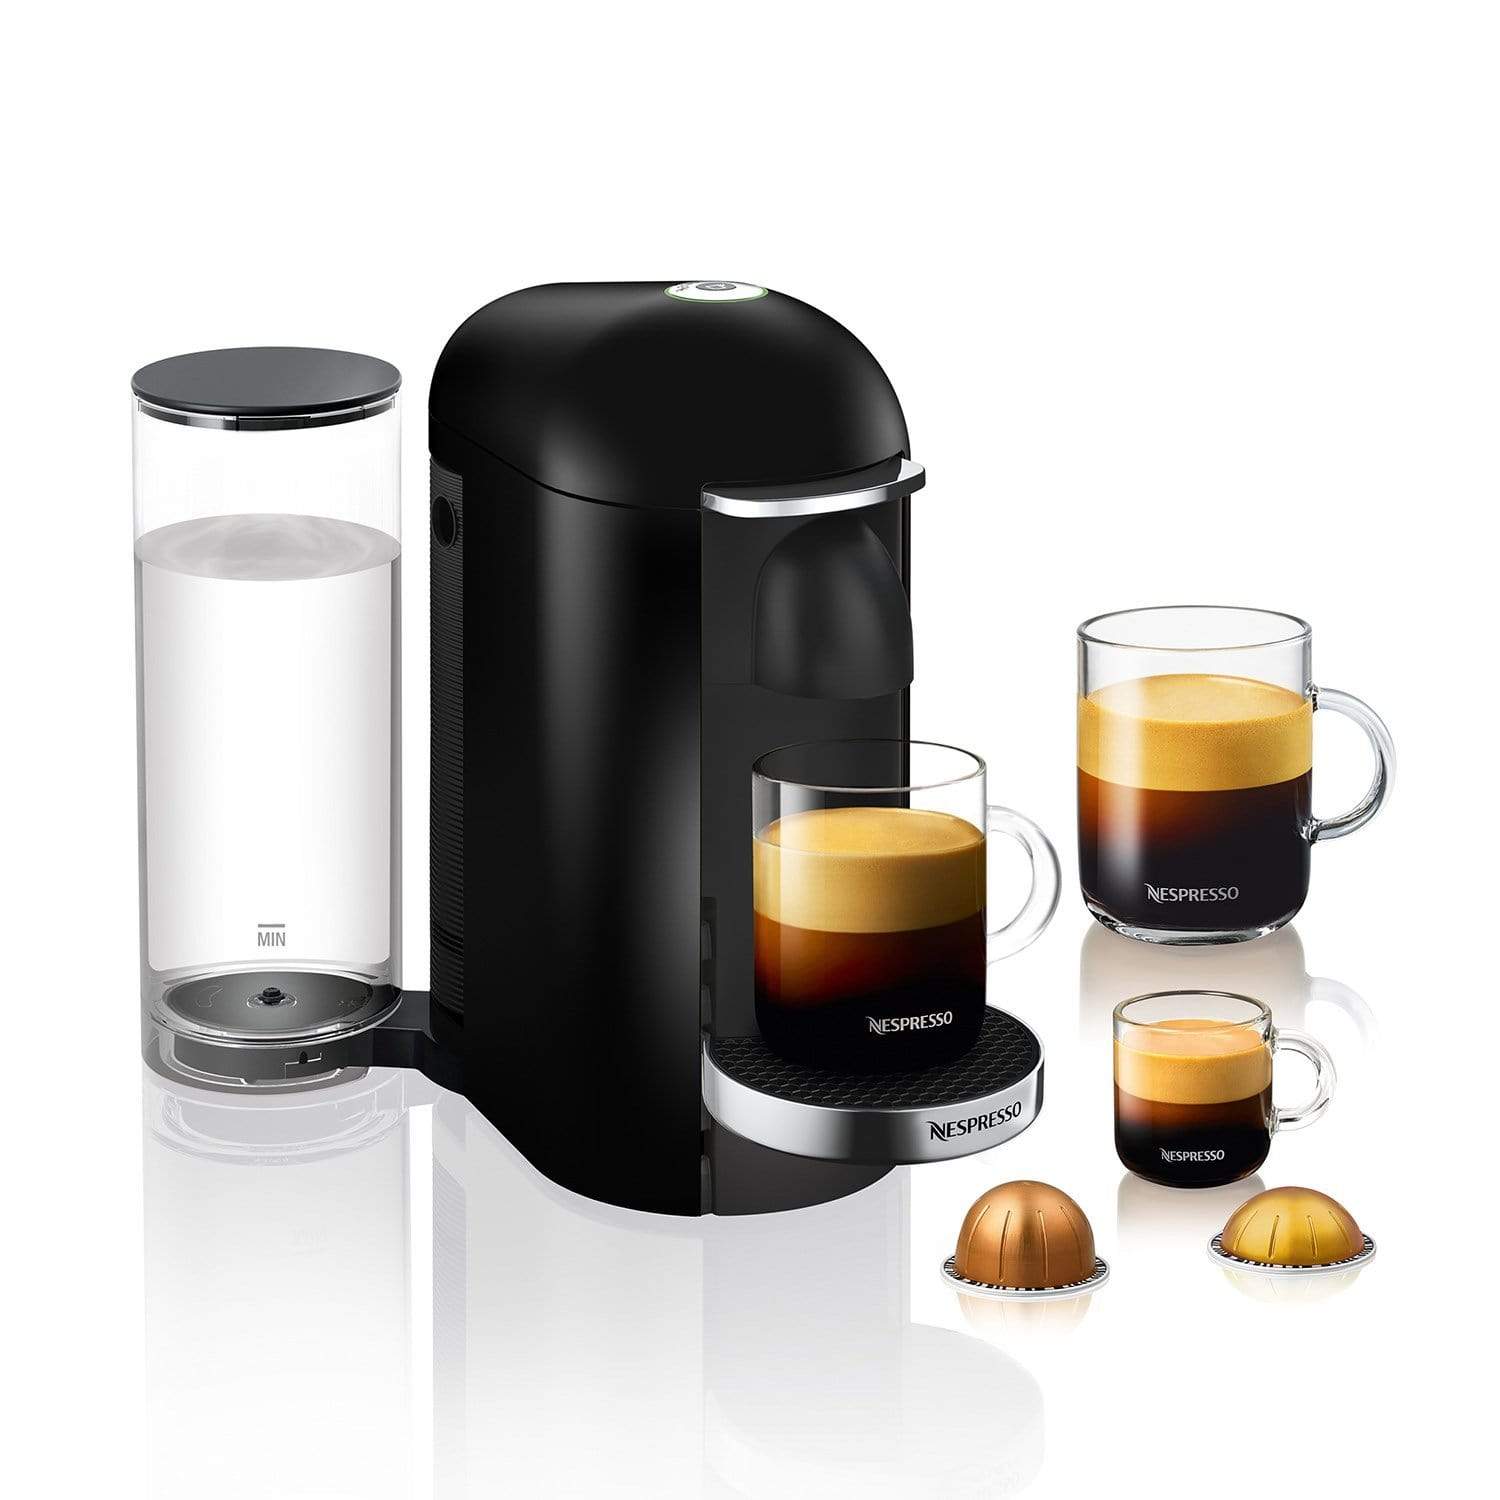 Nespresso ماكينة صنع القهوة فيرتو بلس - أسود ديلوكس - GCB2-GB-BK-NE1 - جاشنمال هوم